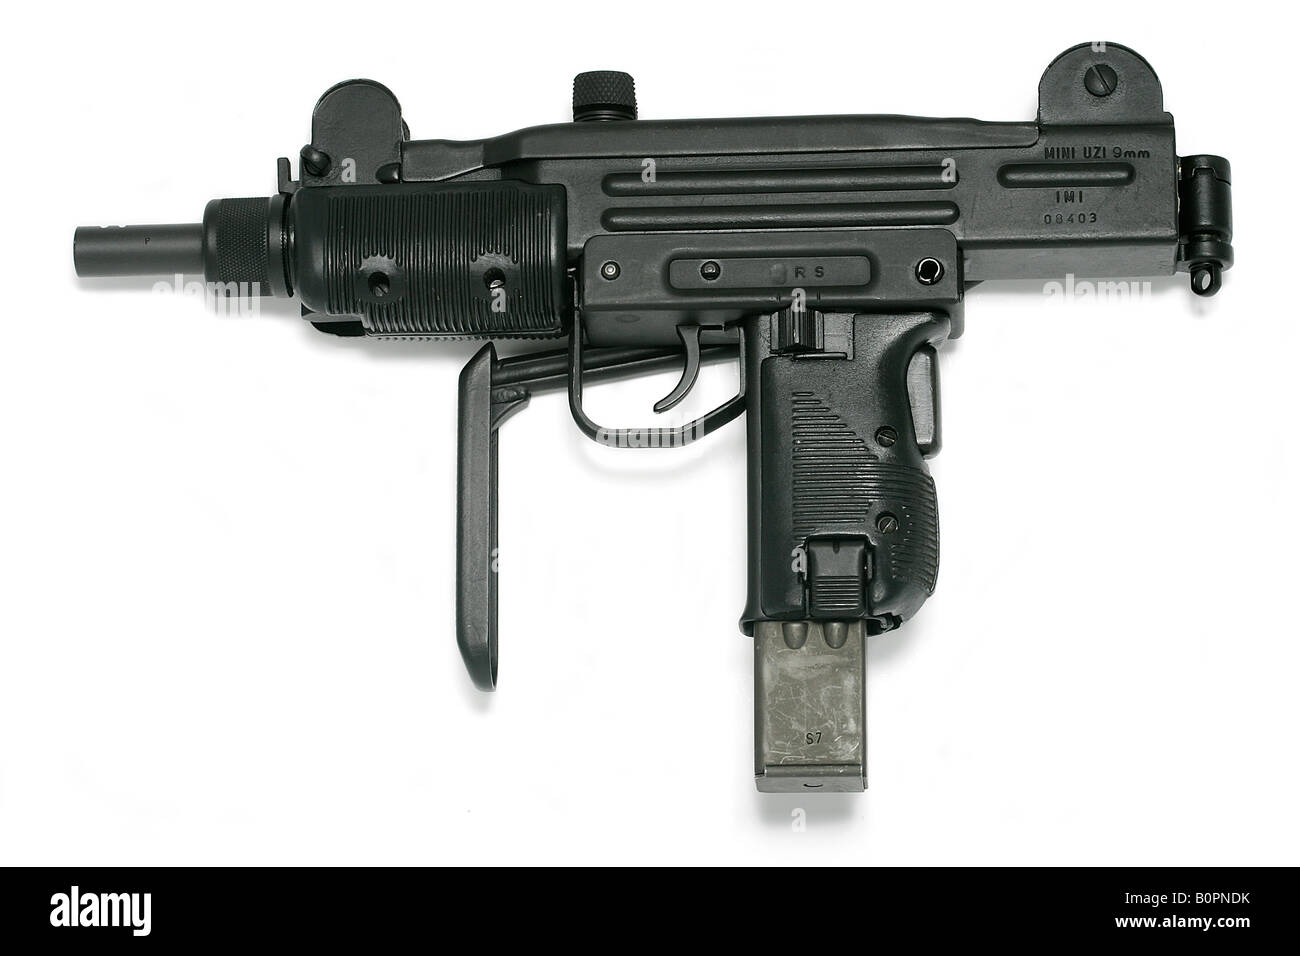 UZI MINI 9mm handgun hand gun pistol Stock Photo